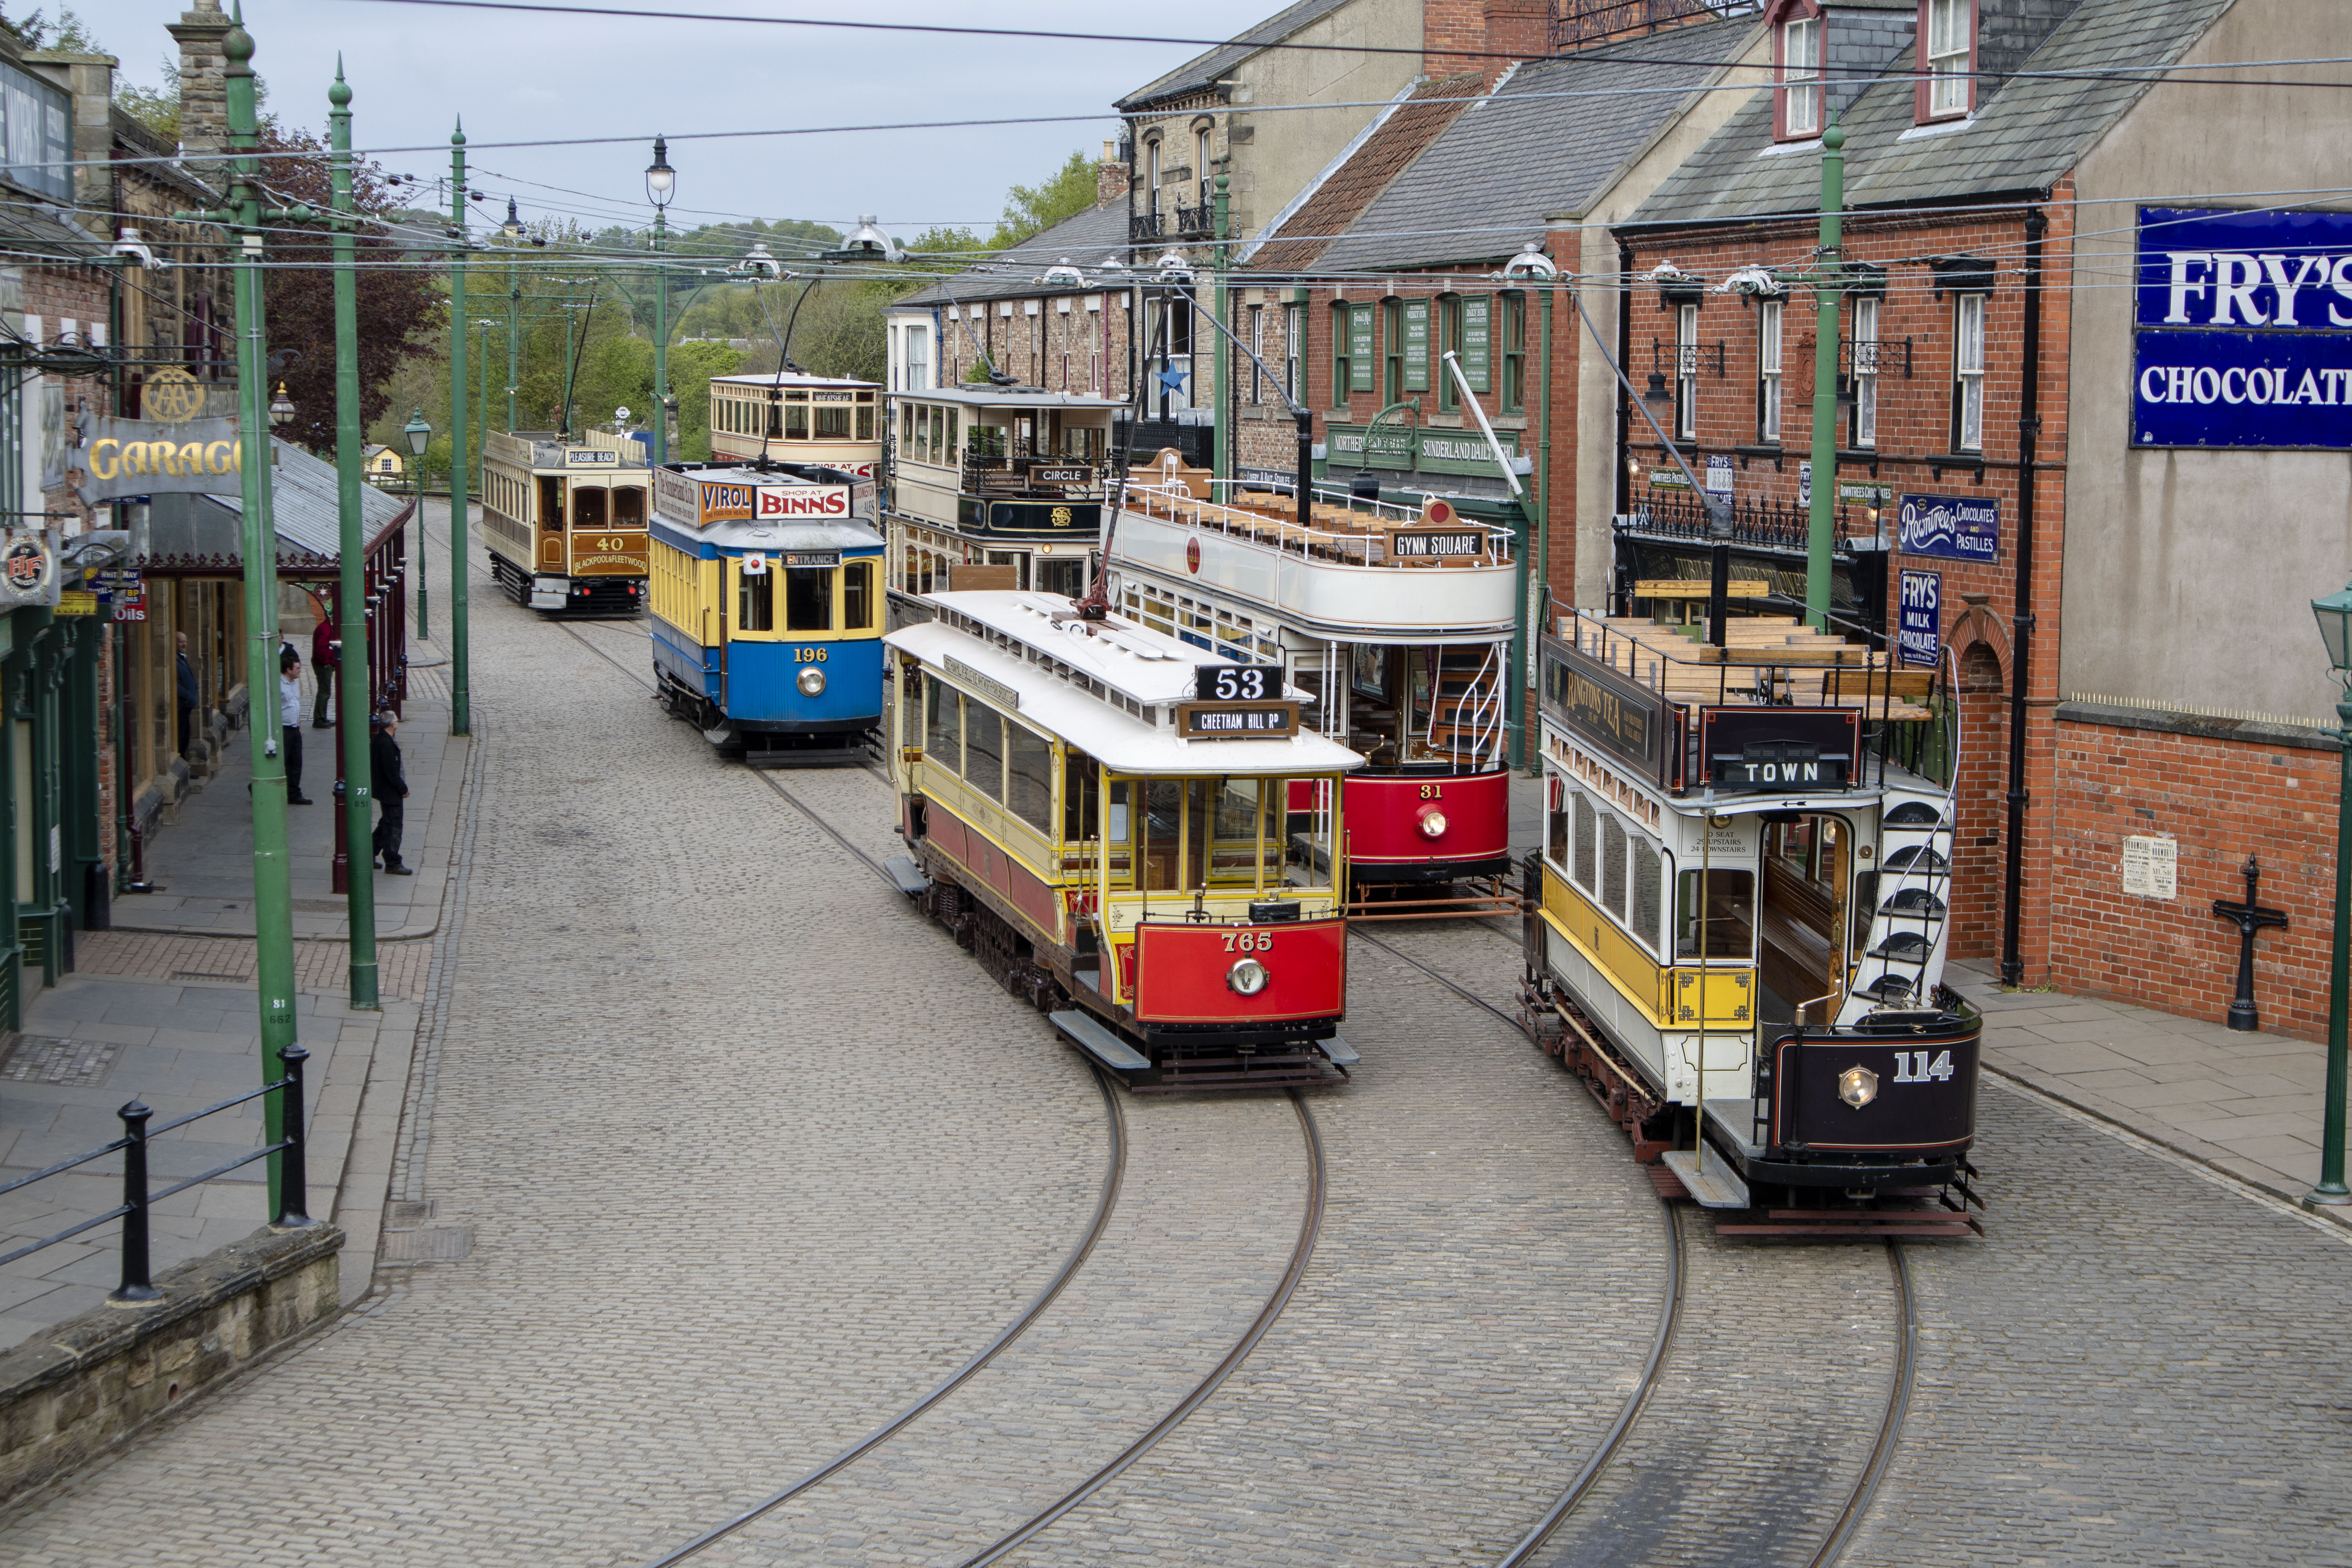 Seven trams in service...